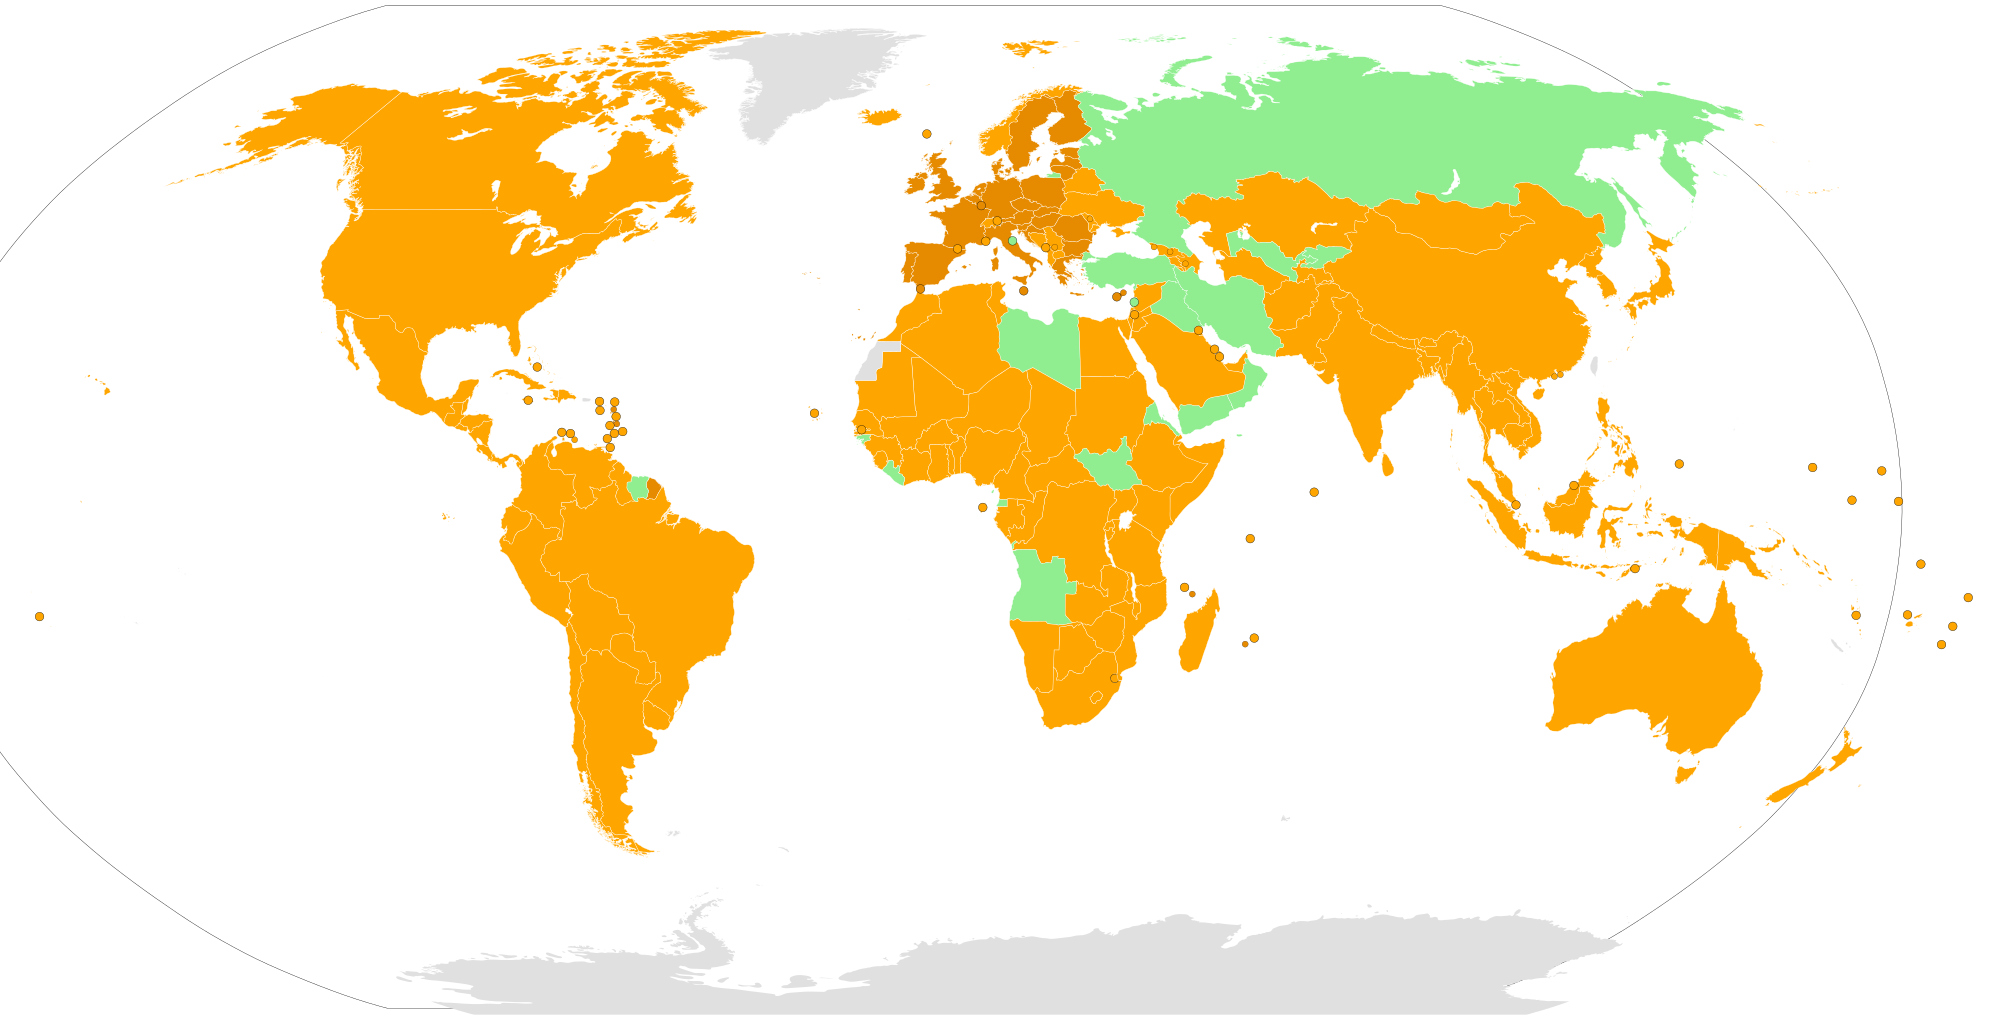 Paris Agreement Wikipedia